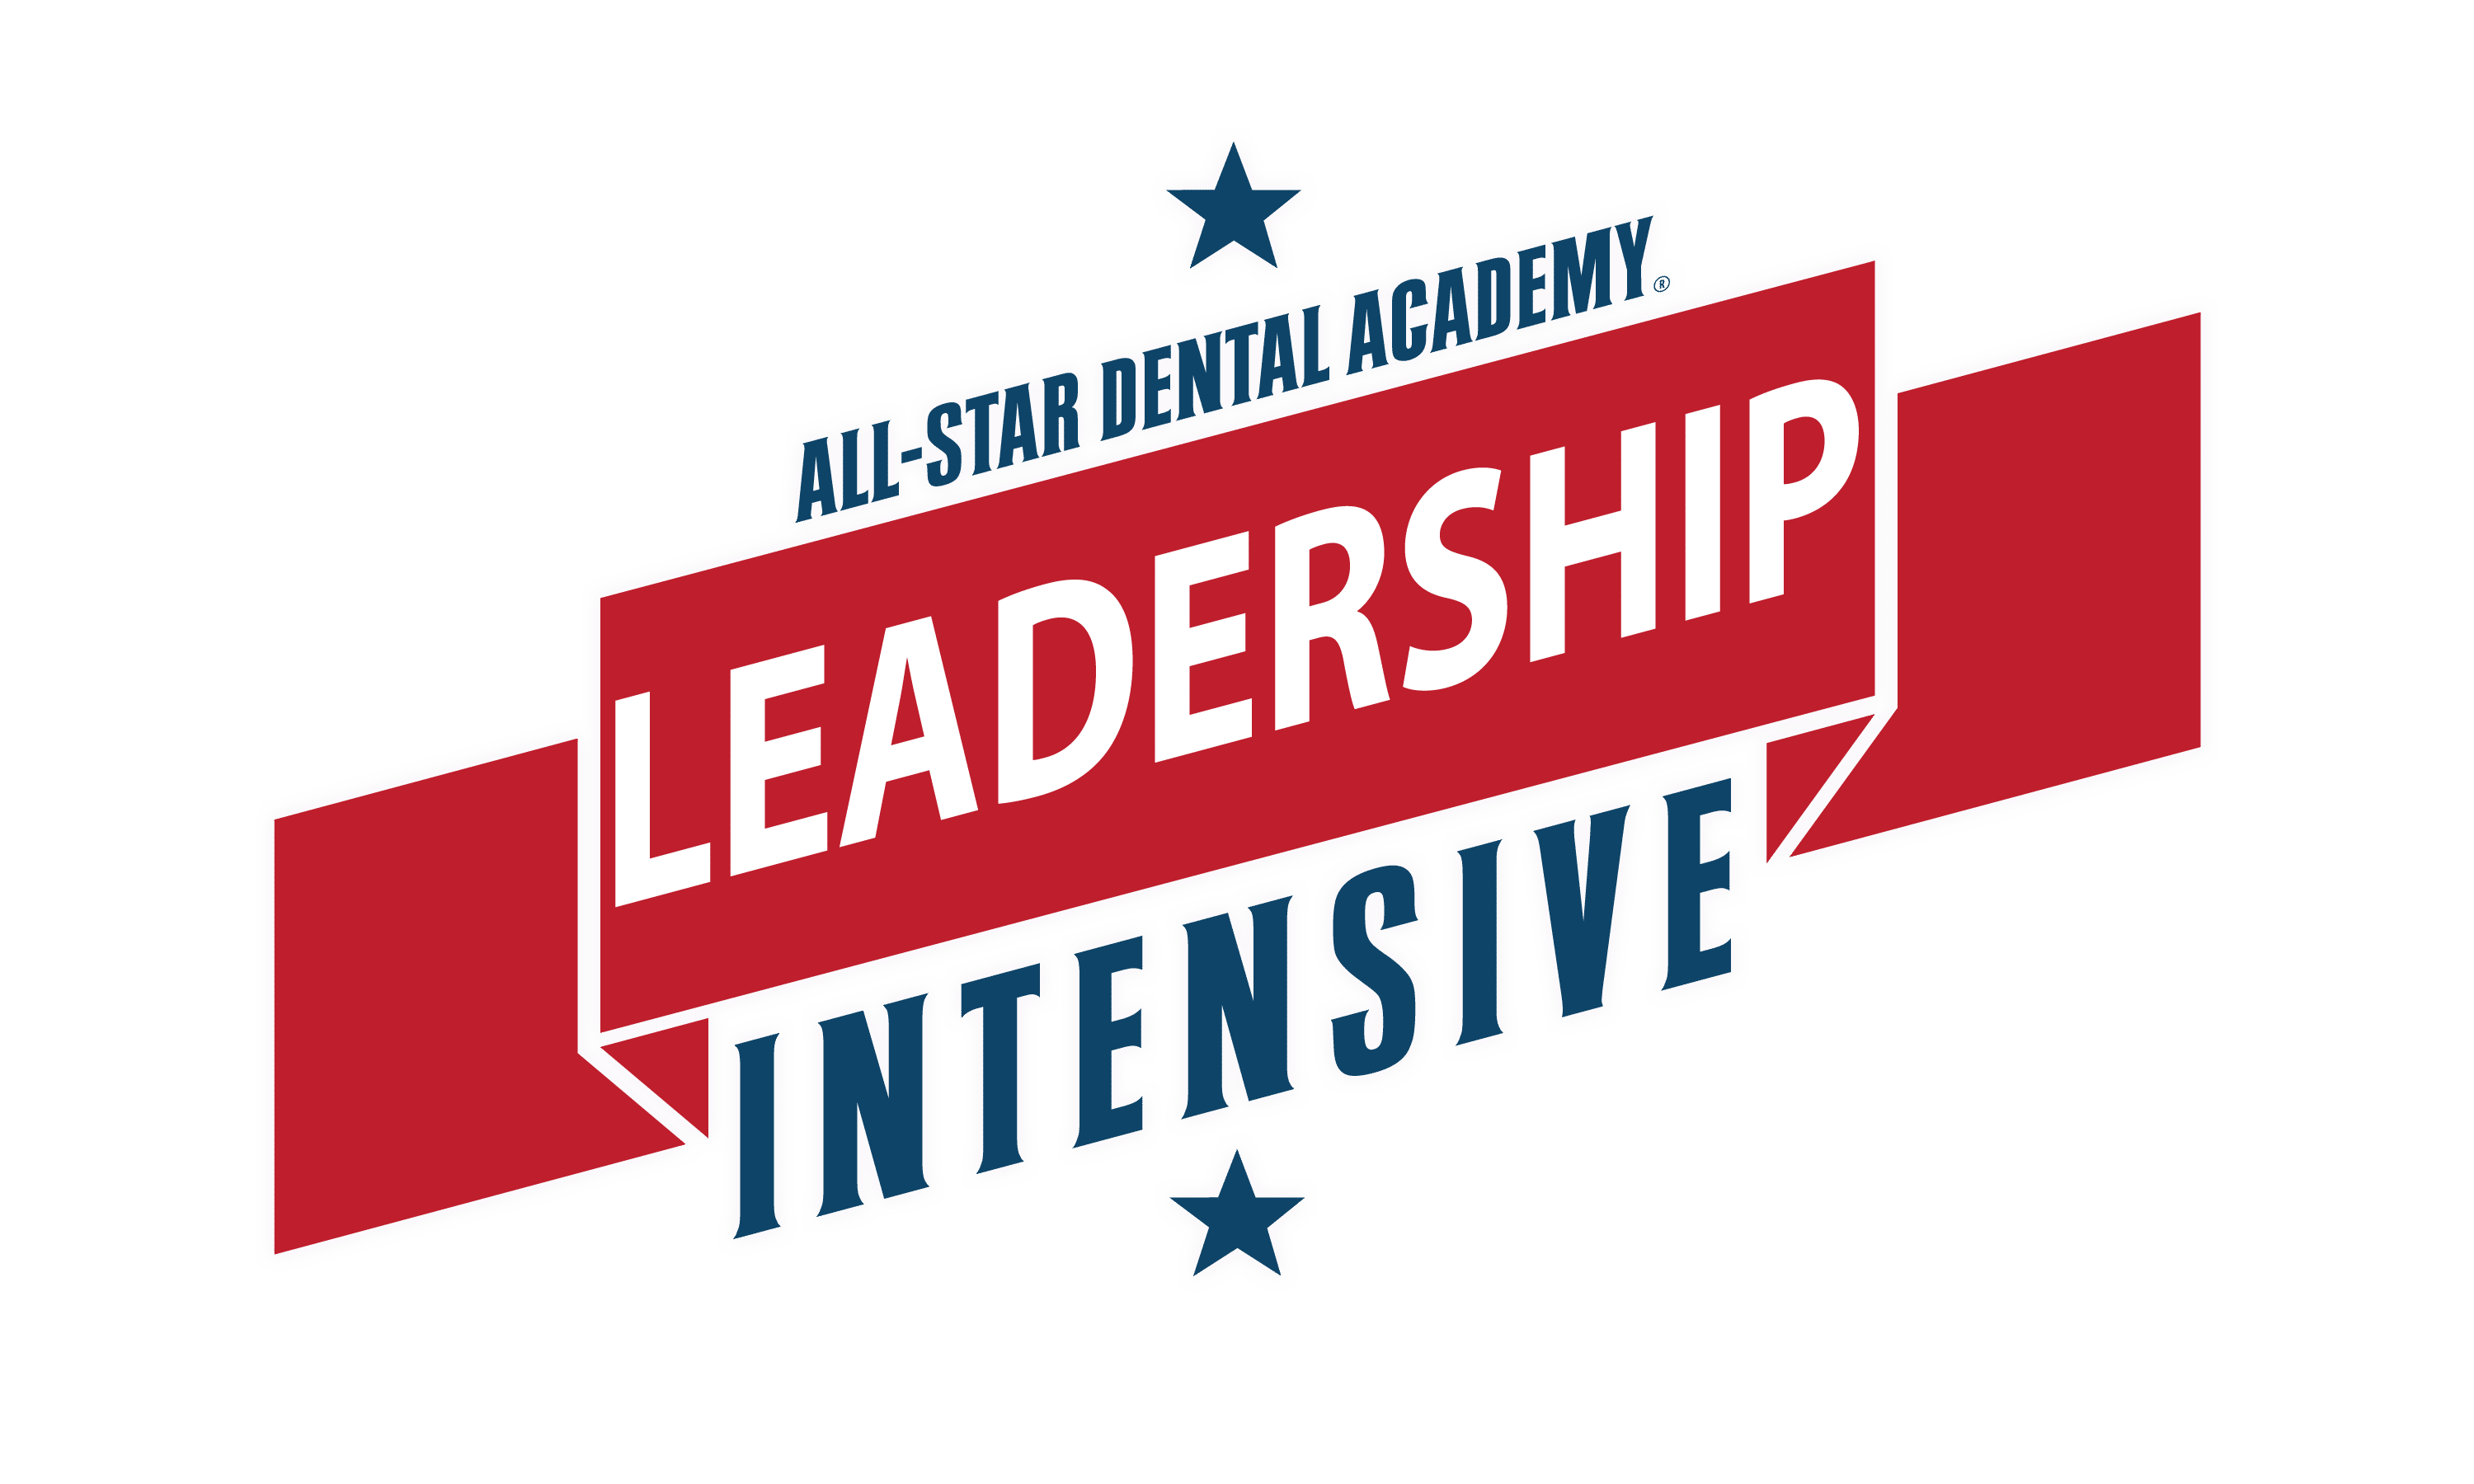 Mastery Series LEADERSHIP Logo Red Glow, All-Star Dental Academy